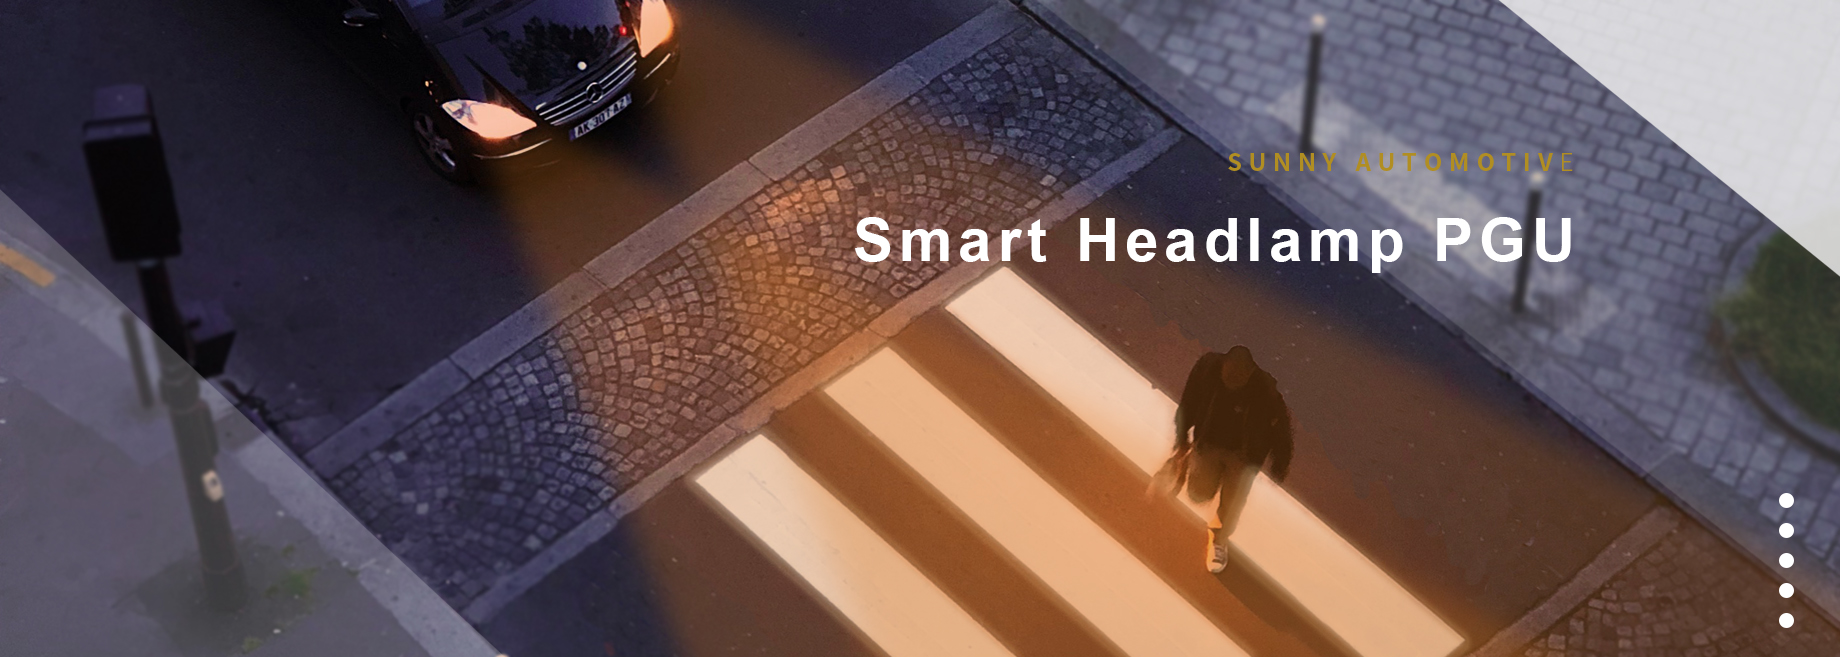 Smart Headlamp PGU